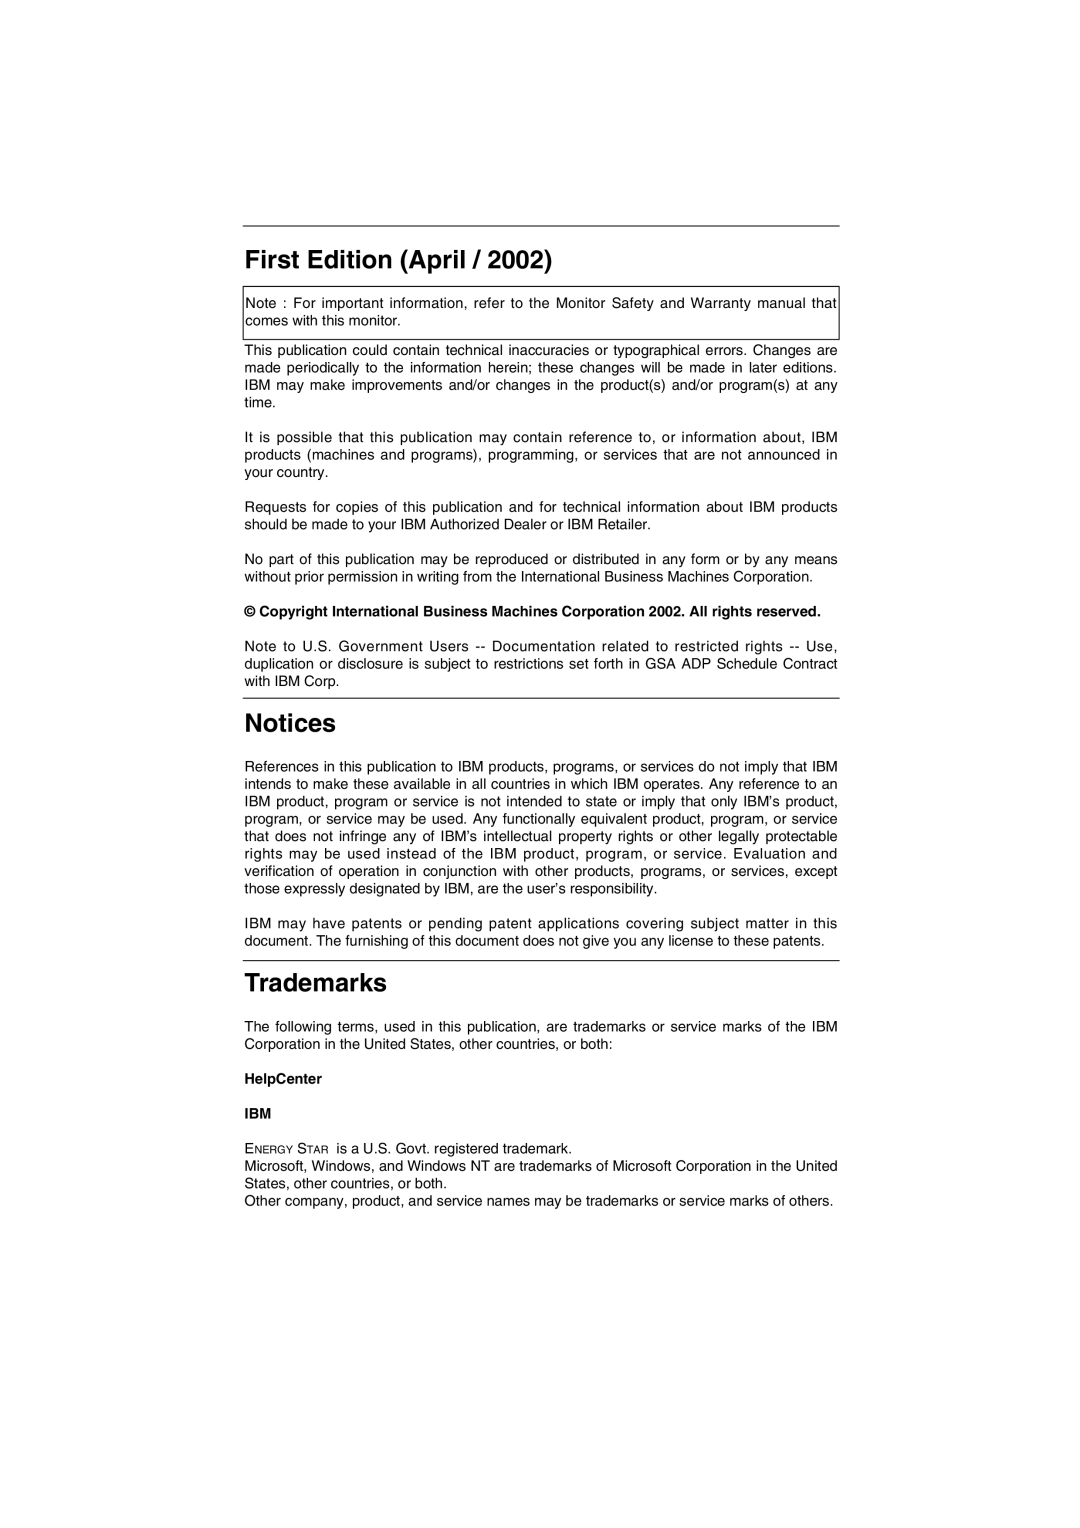 IBM 6517-6LN manual First Edition April, Notices, Trademarks, HelpCenter IBM 